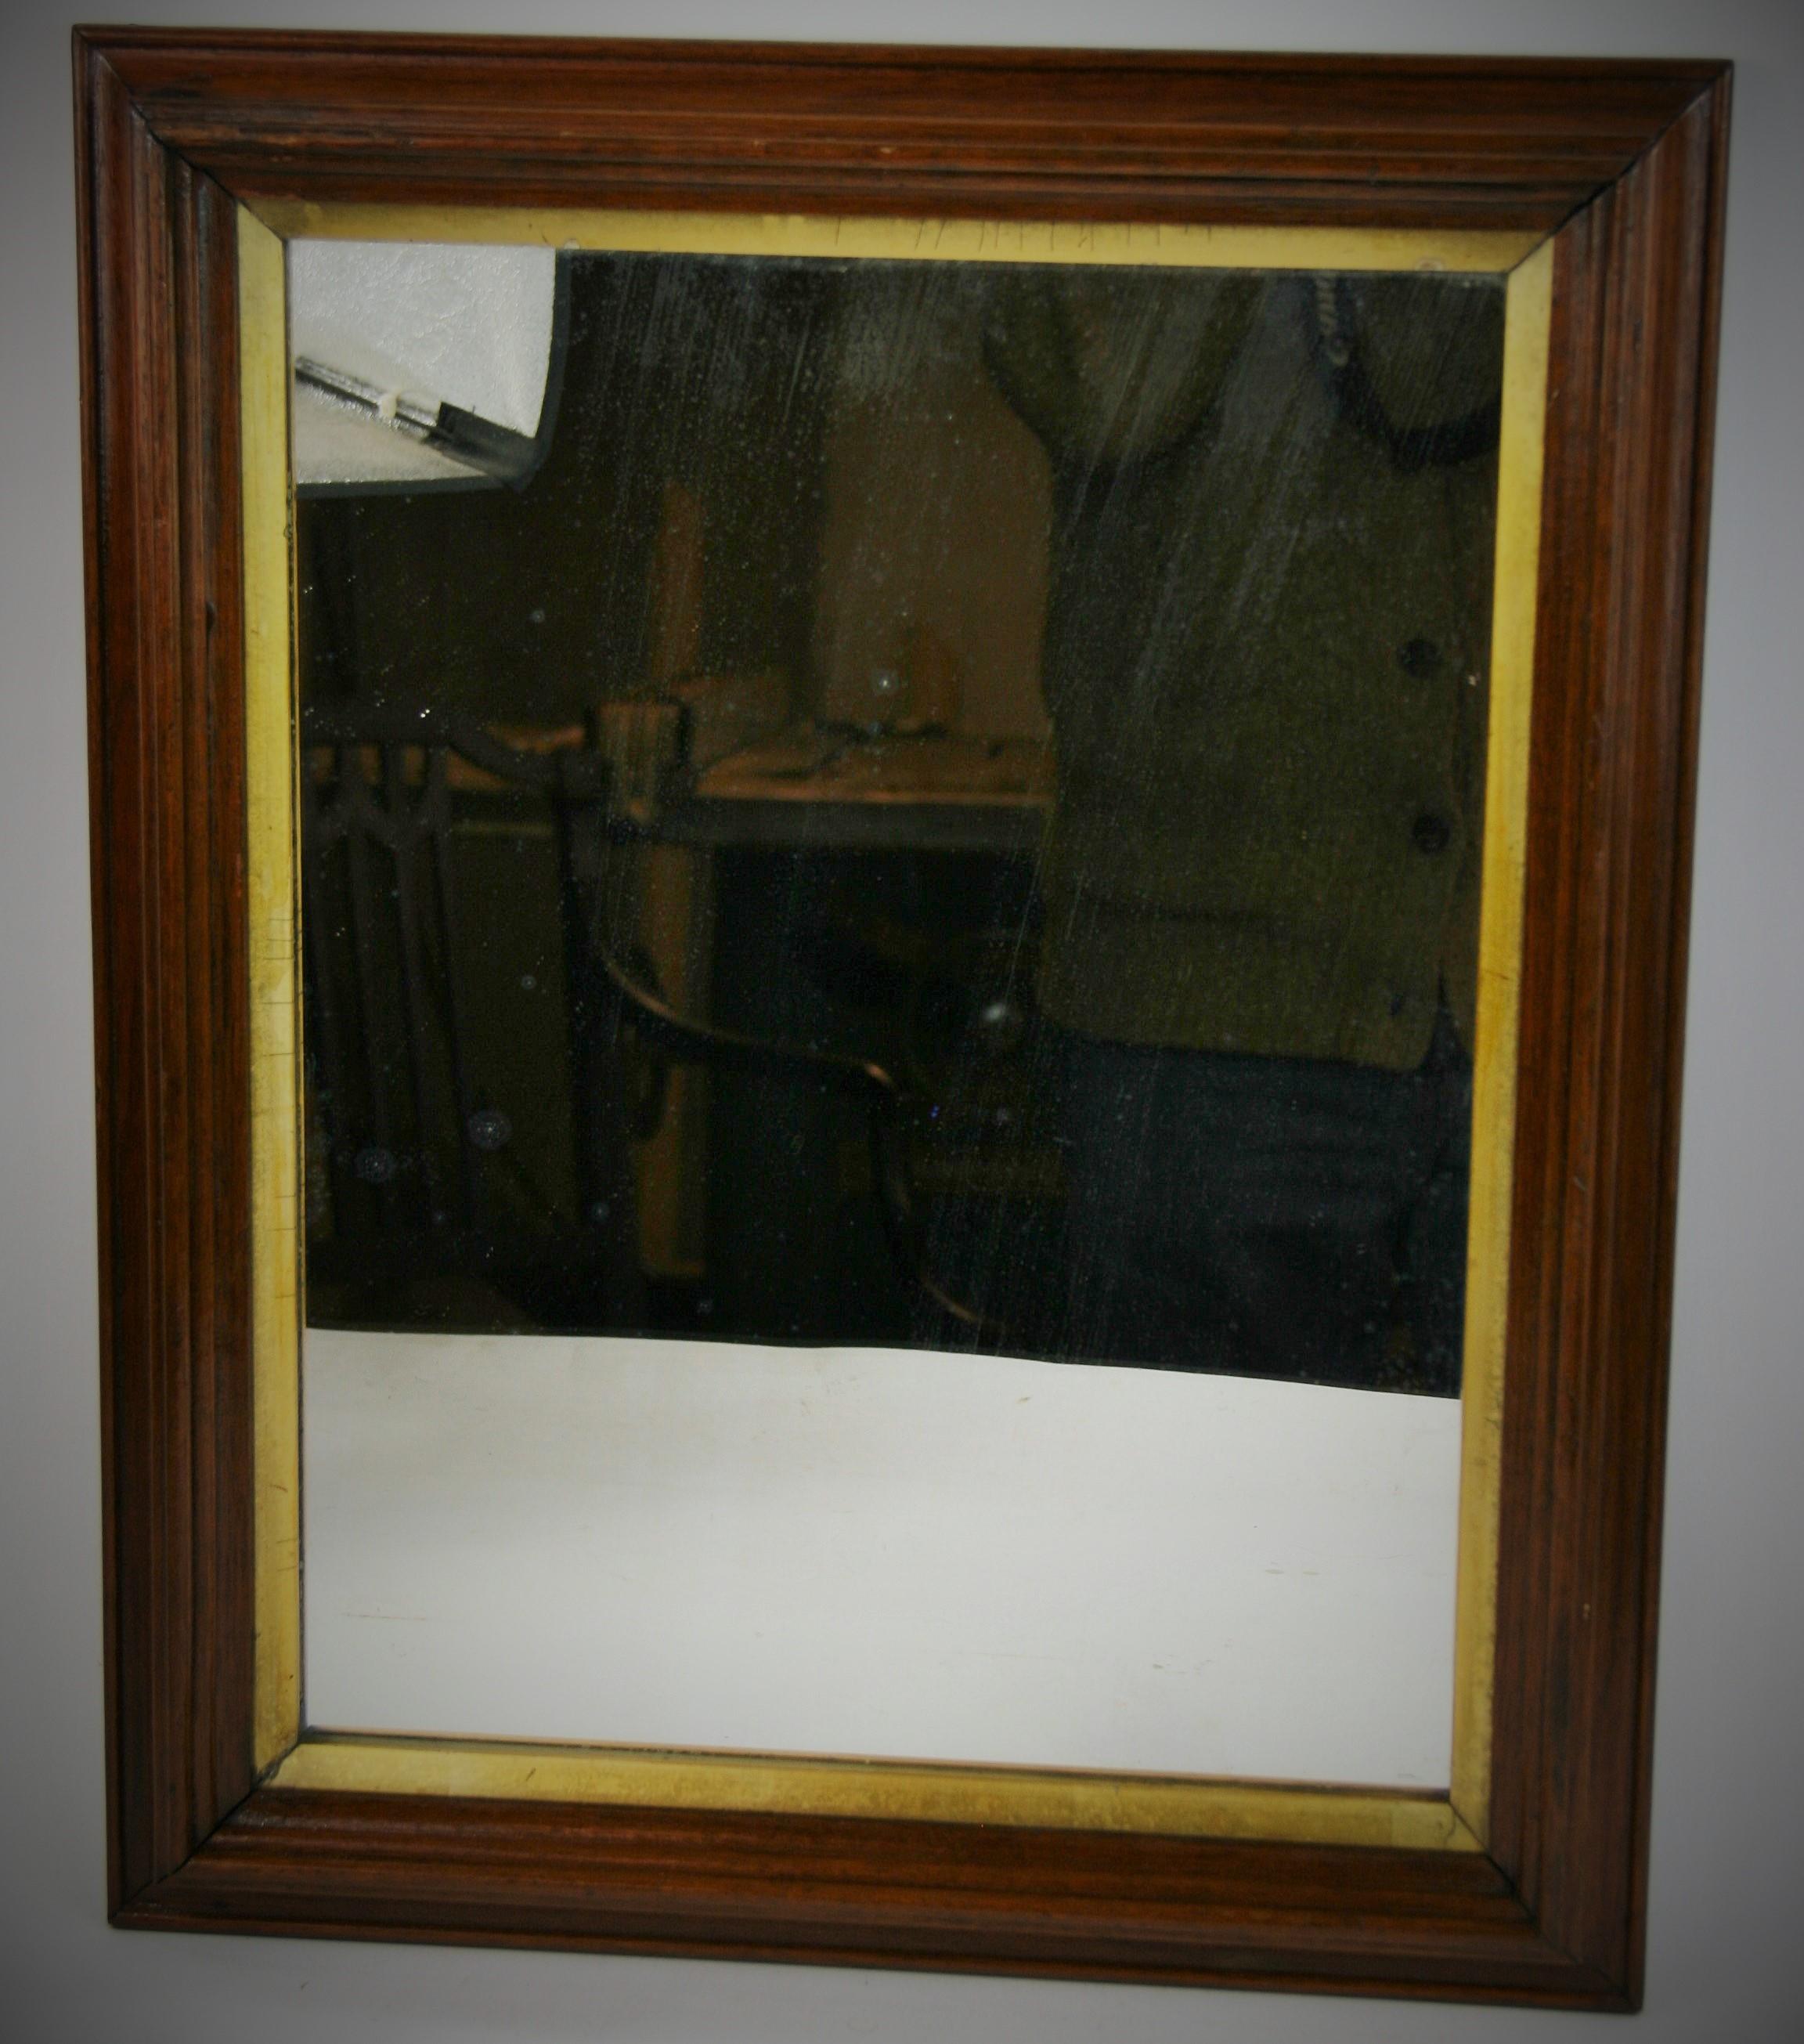 3-438 walnut mirror with gold liner, circa 1910.